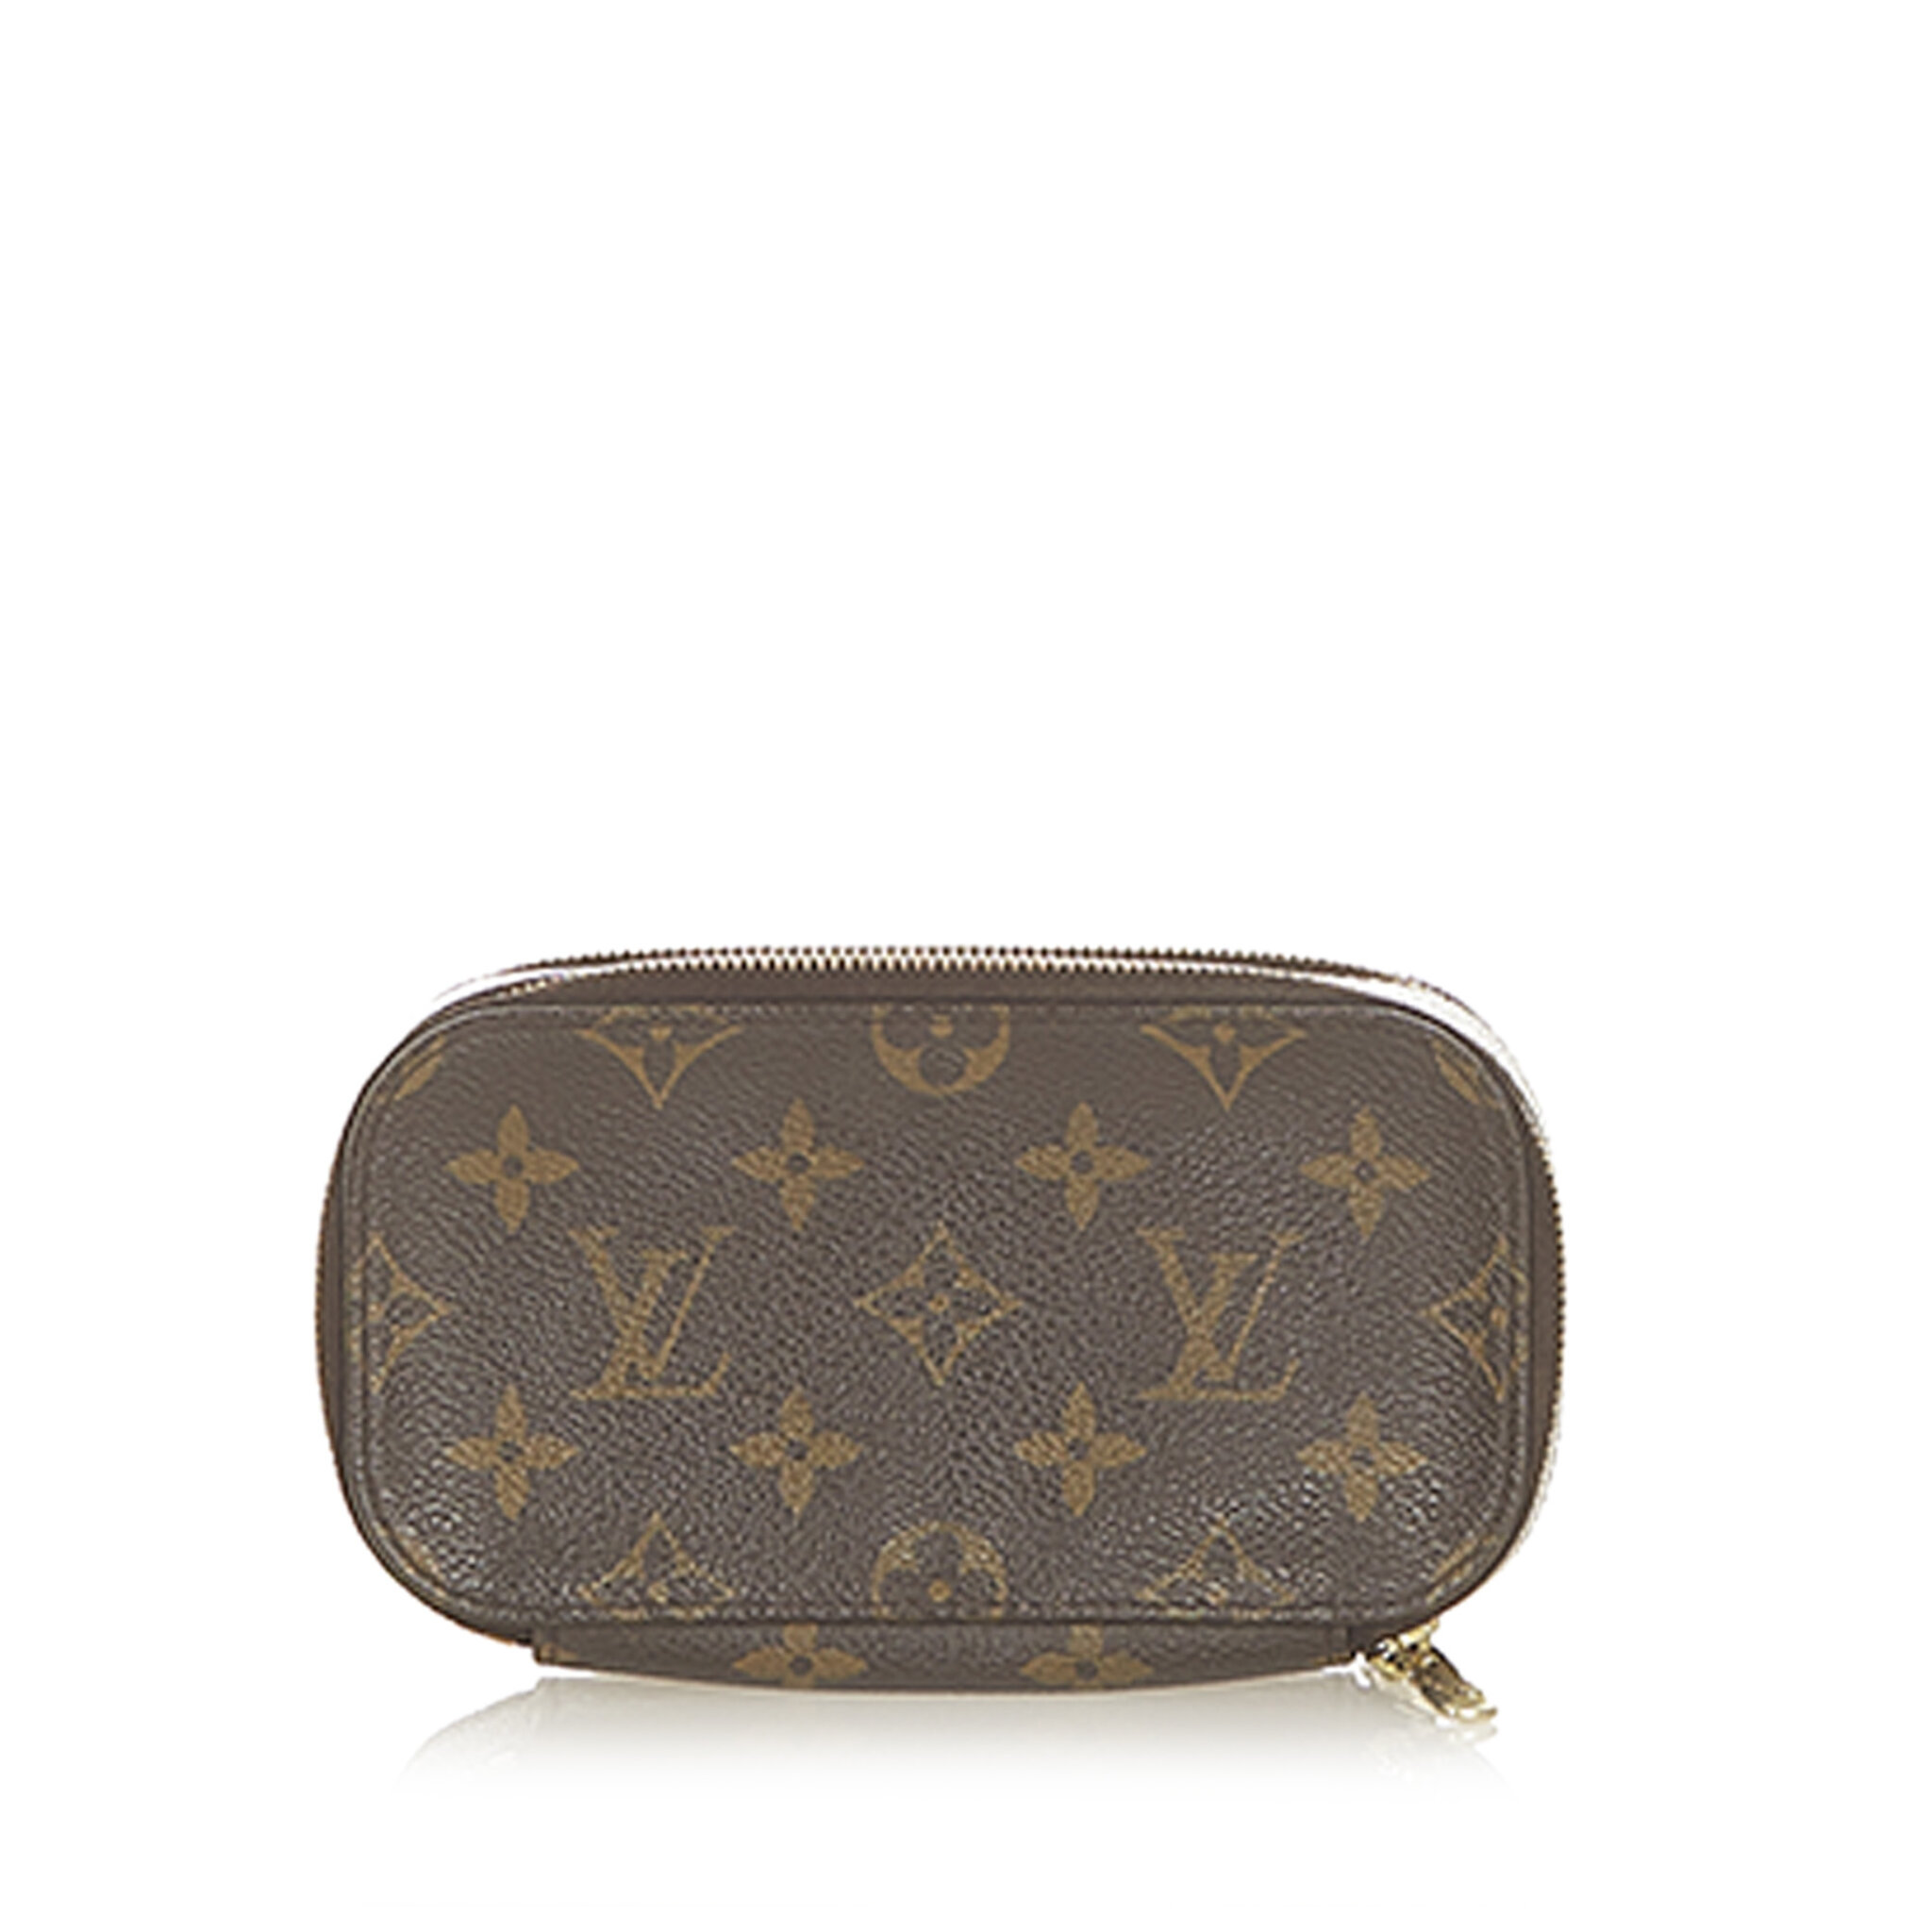 Louis Vuitton Monogram Trousse Blush Pm, brown